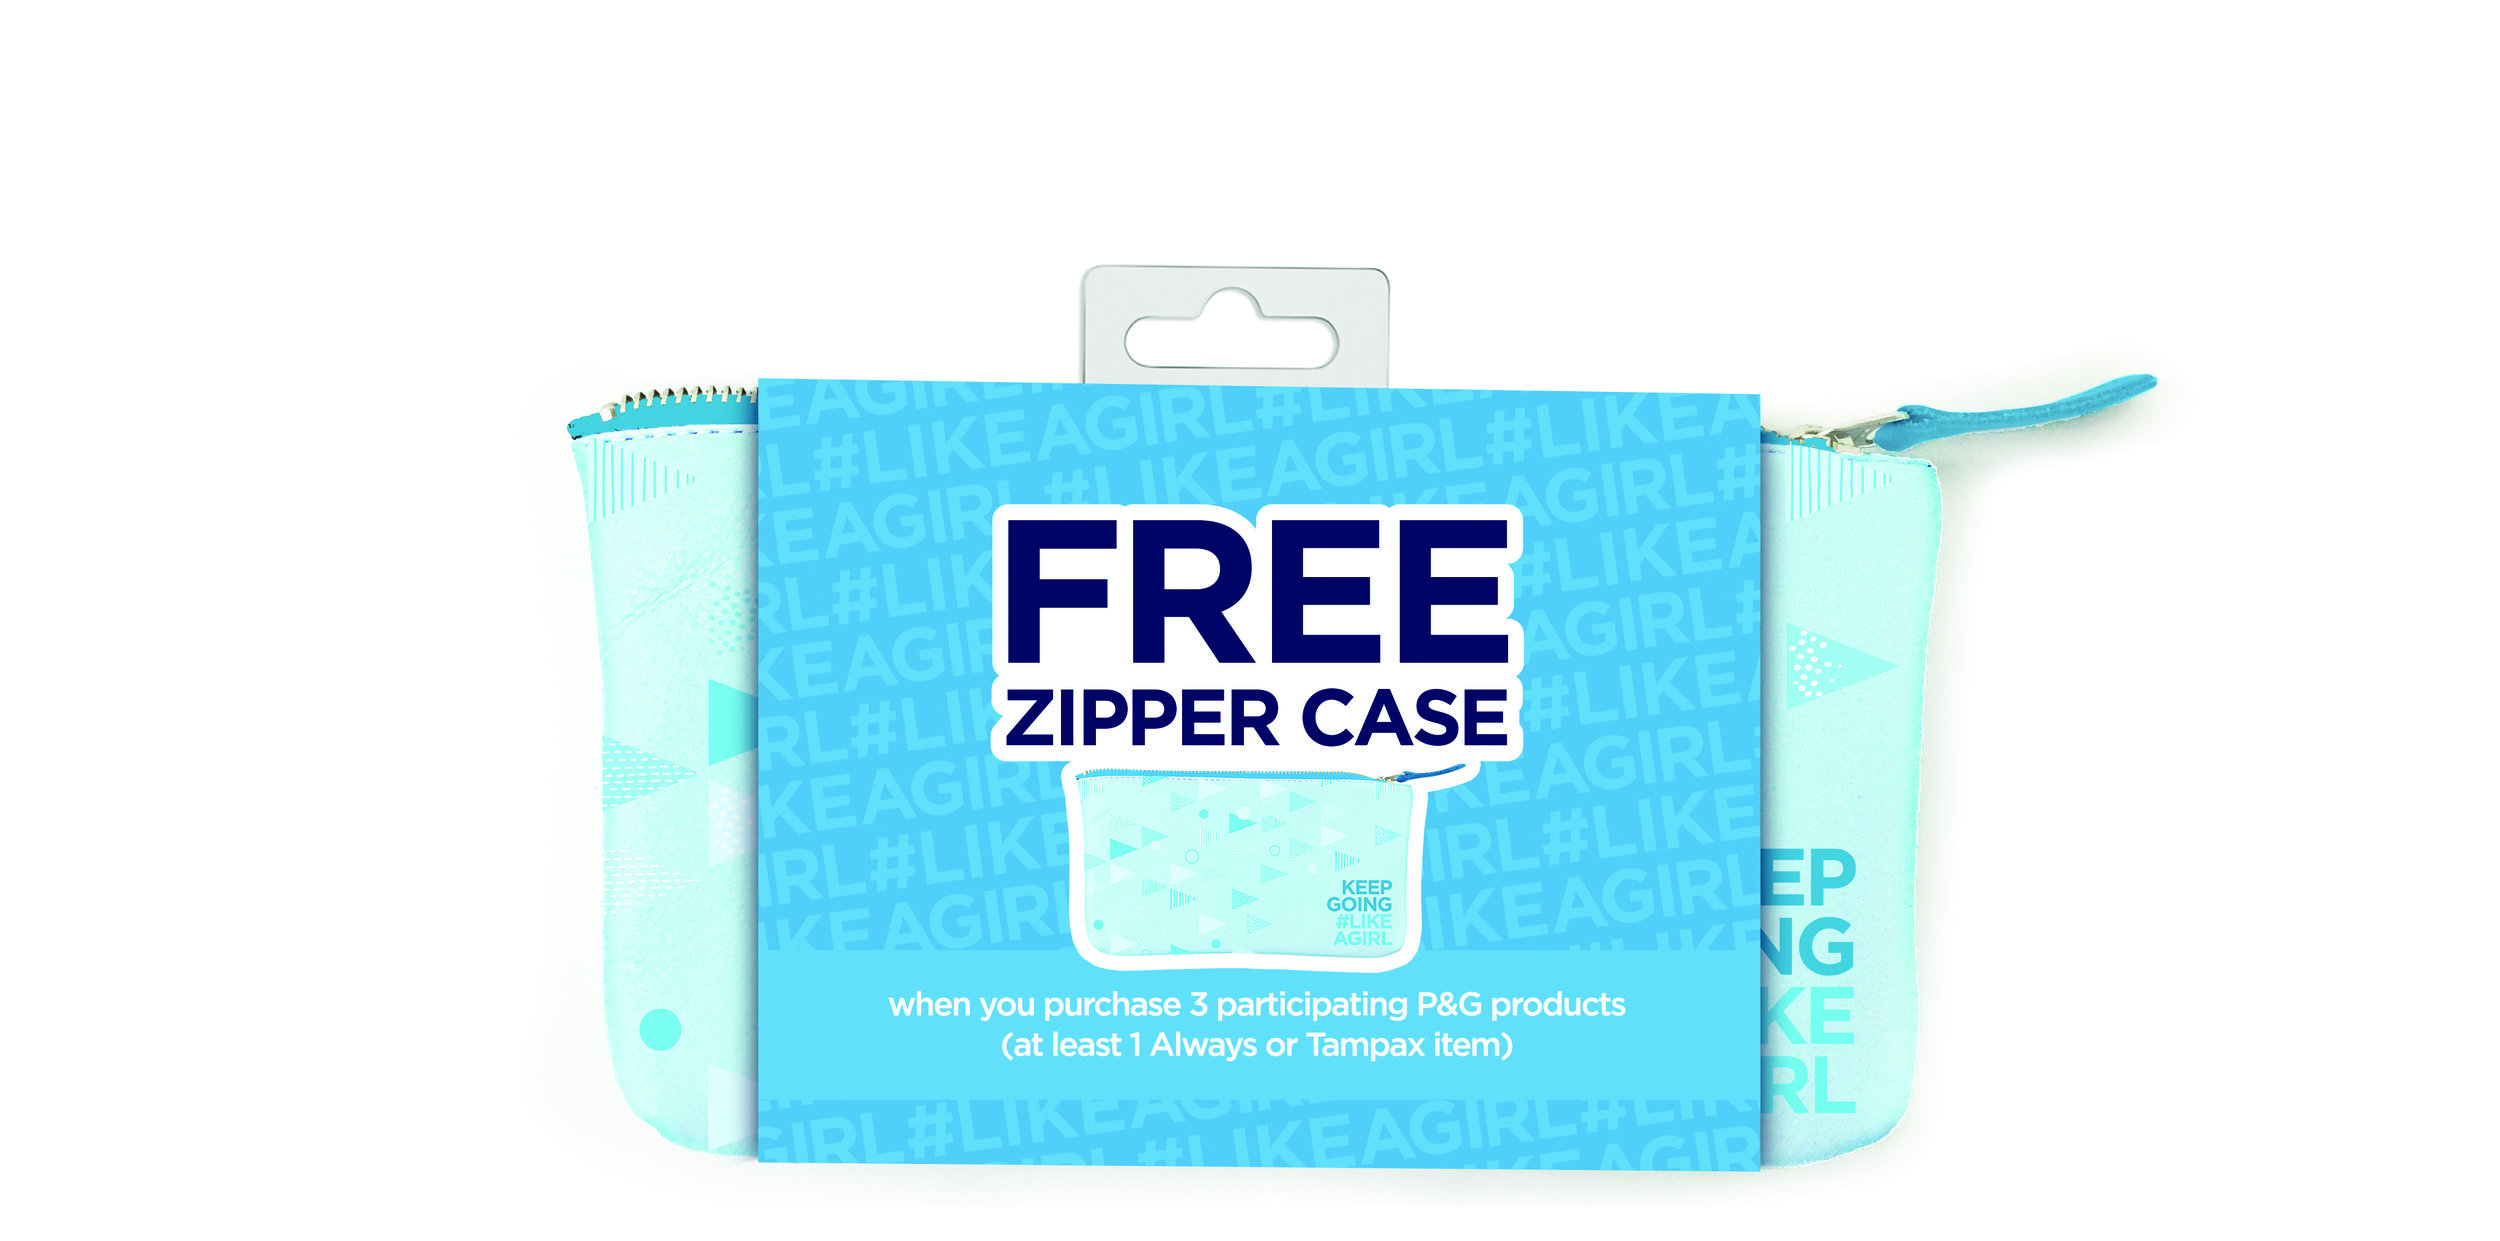 Zipper/Pencil Case in Packaging